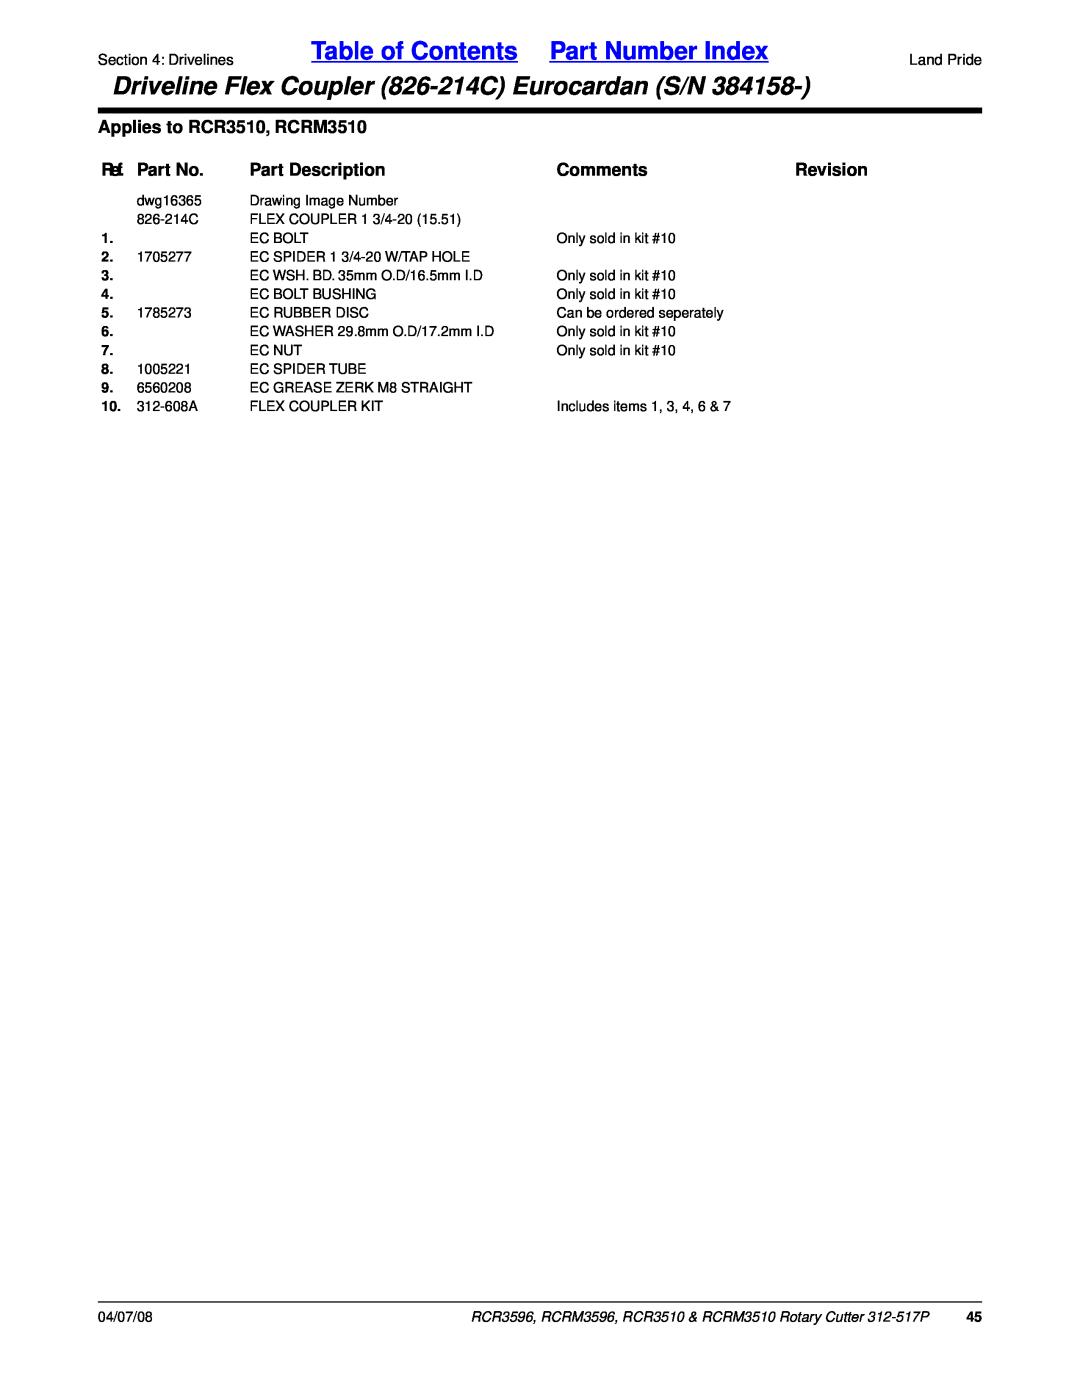 Land Pride RCRM3510 manual Table of Contents Part Number Index, Driveline Flex Coupler 826-214CEurocardan S/N, Ref. Part No 